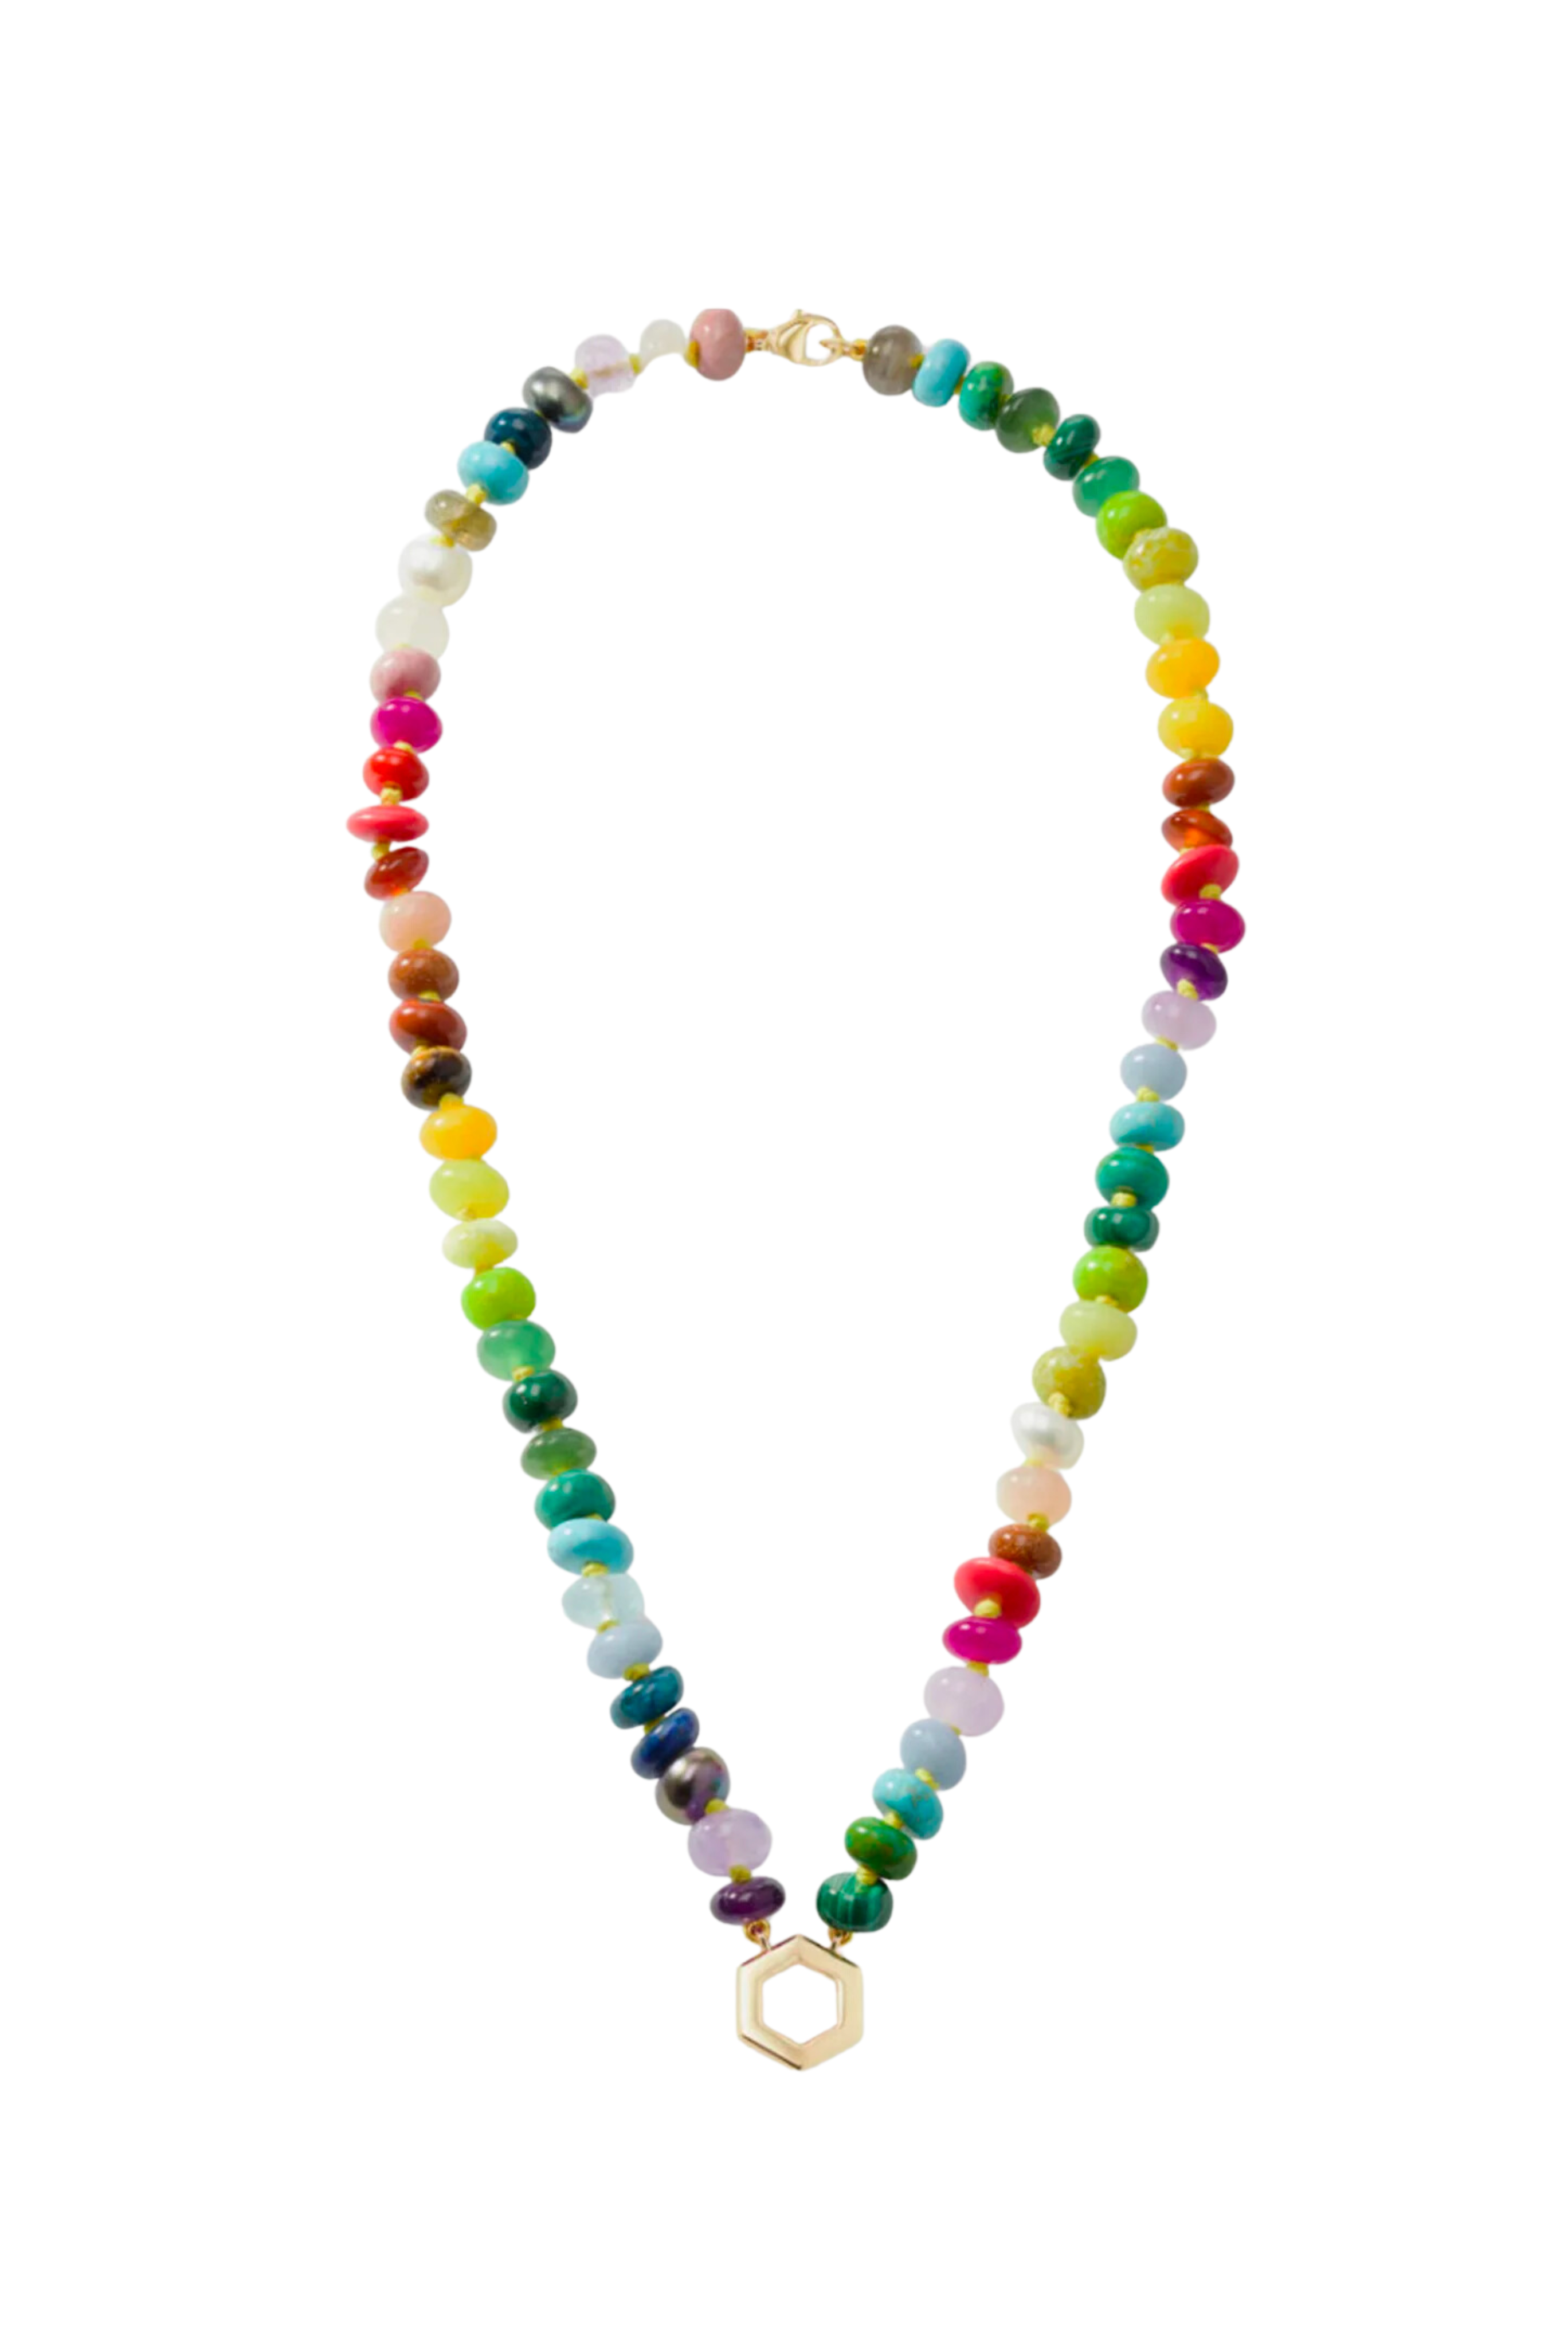 Murano Glass Rainbow Beaded Necklace | Handmade Necklace | Uno Alla Volta